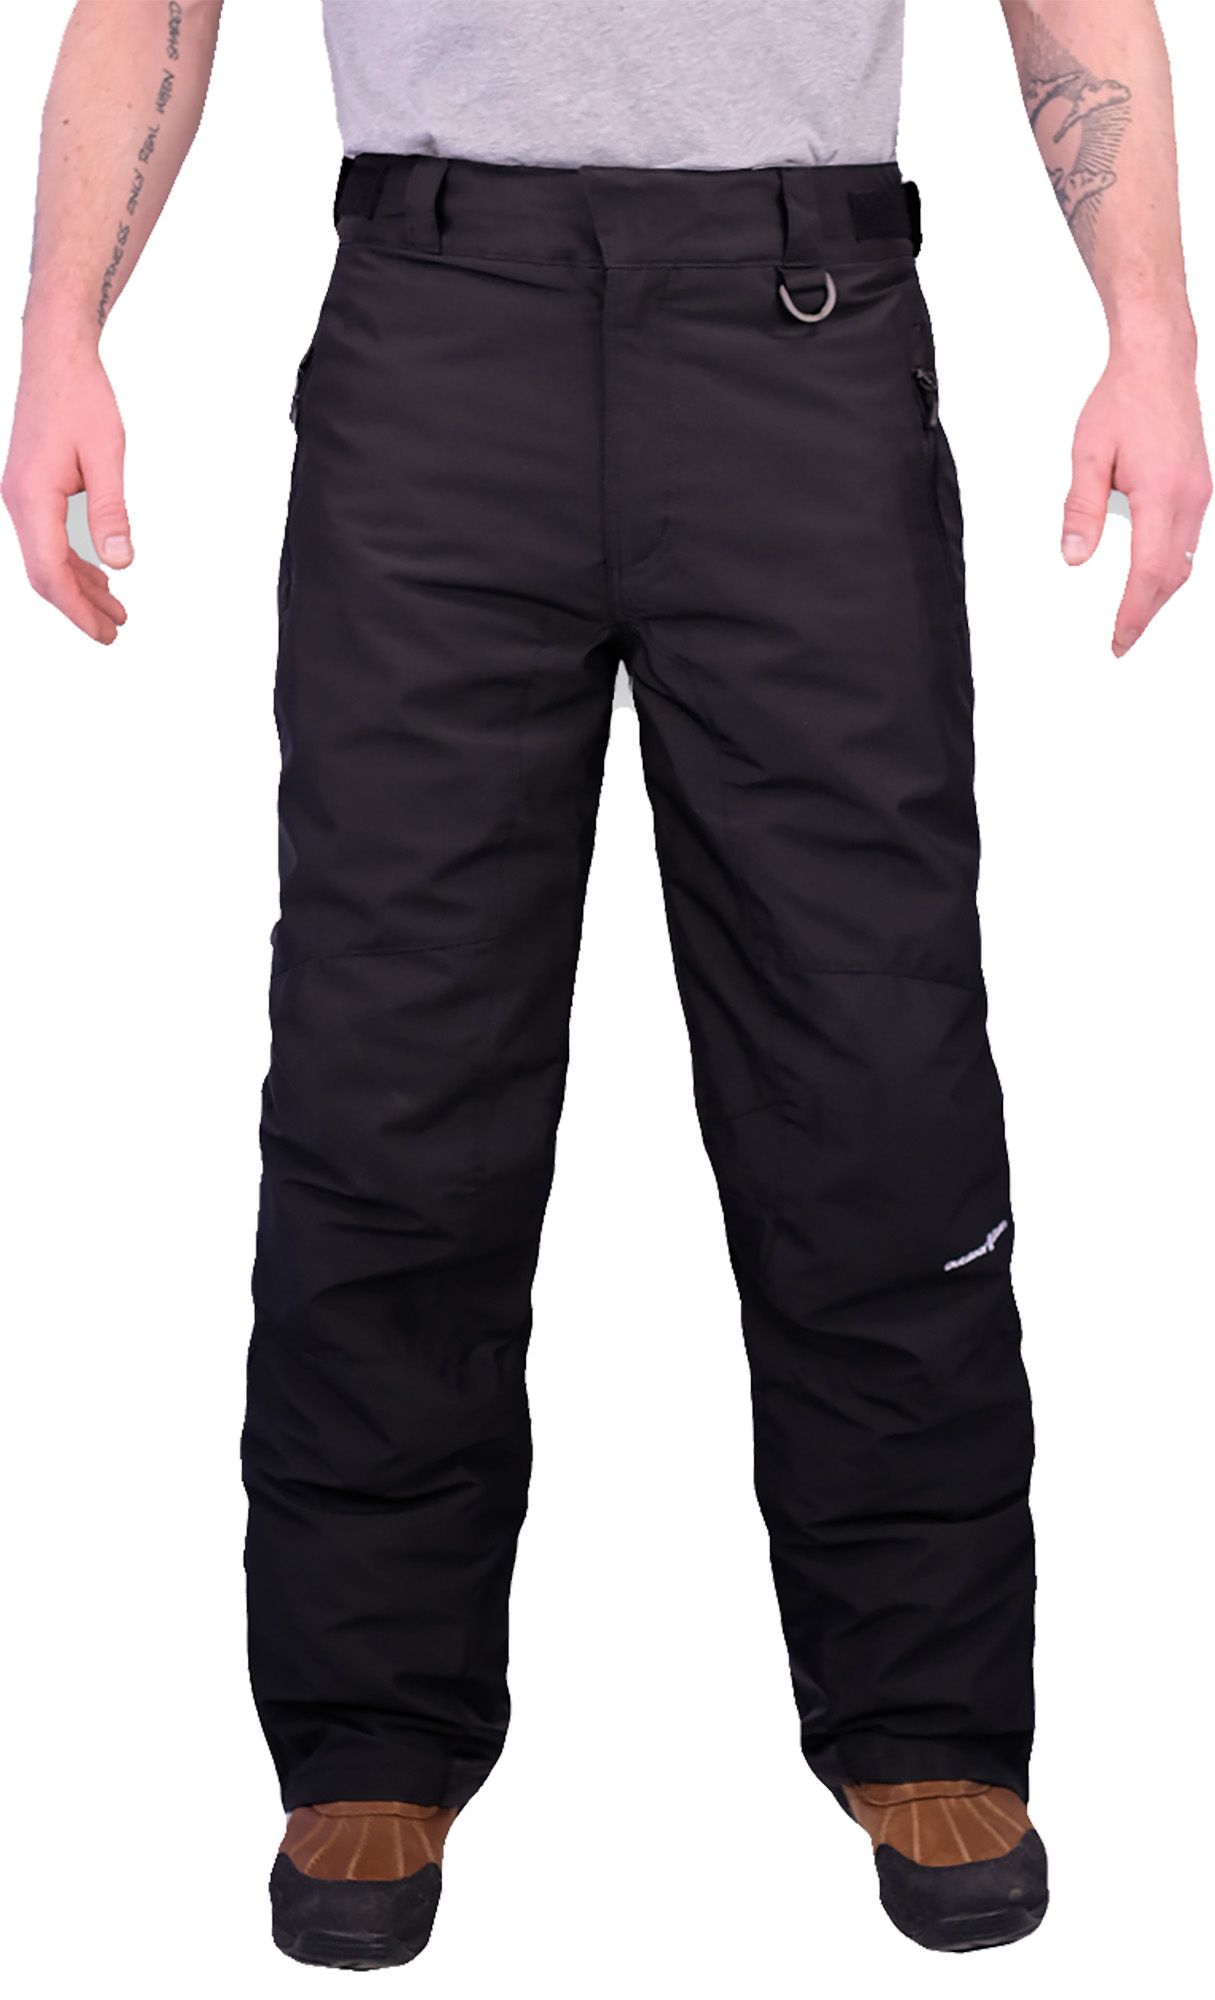 Photos - Ski Wear Outdoor Gear Men's Polar Pants, Small, Black 18OGEMMPLRPNTXXXXAOA